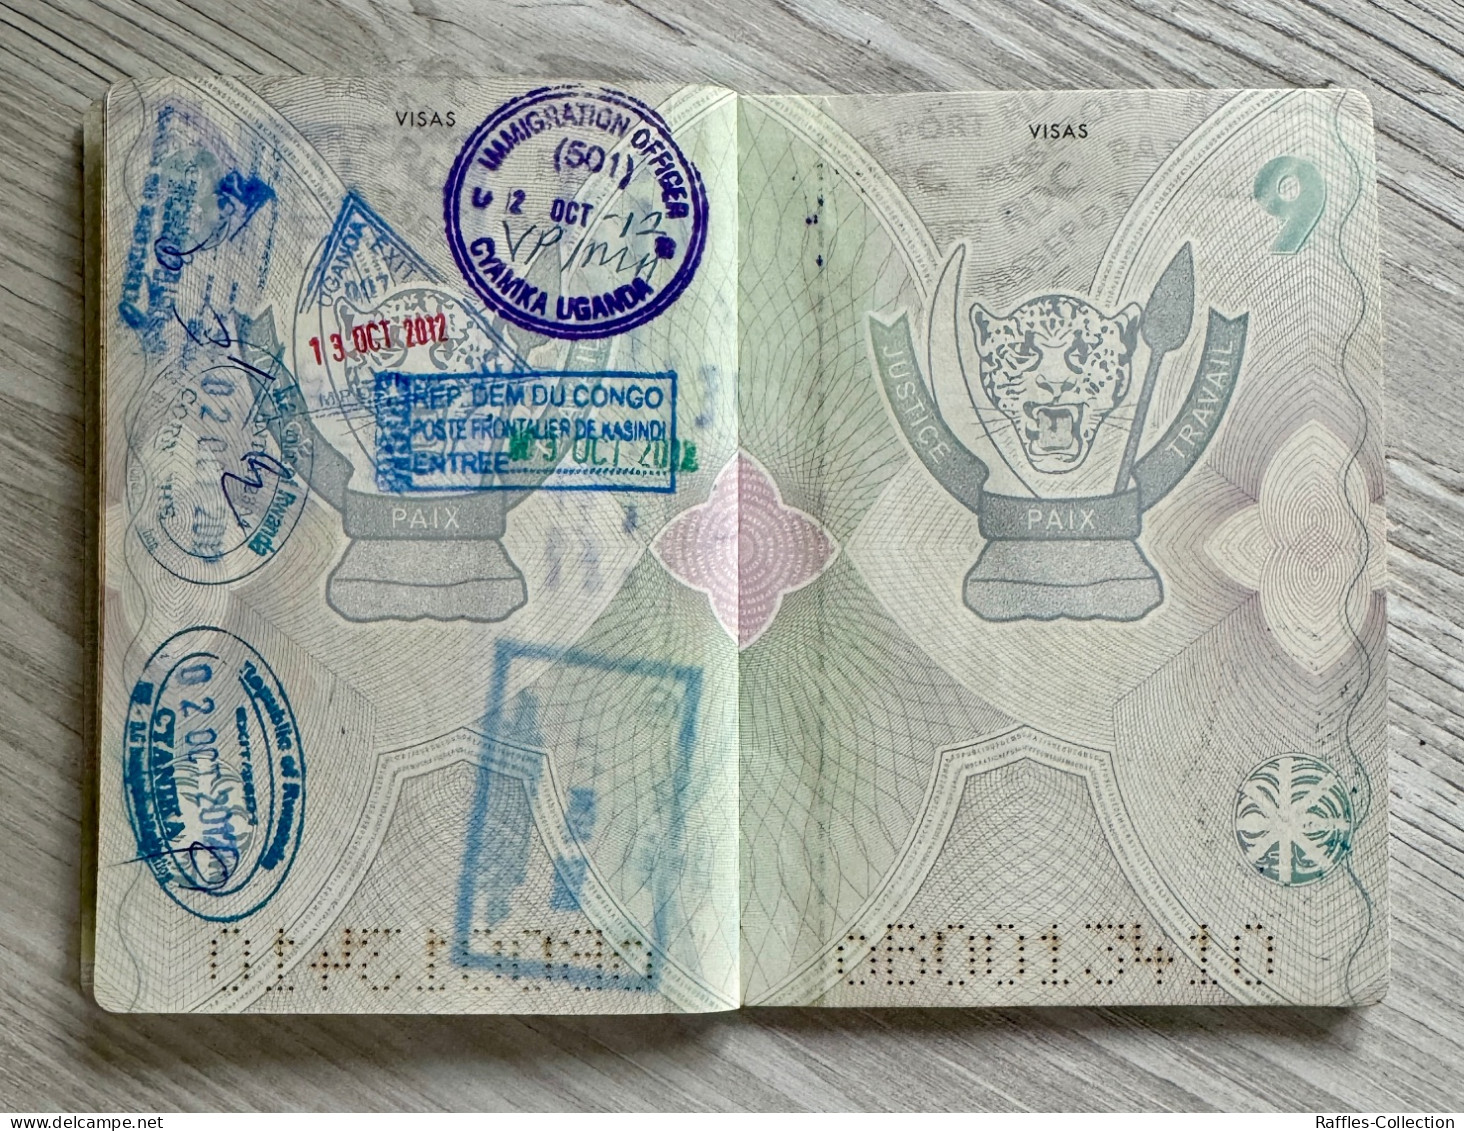 Congo passport passeport reisepass pasaporte passaporto